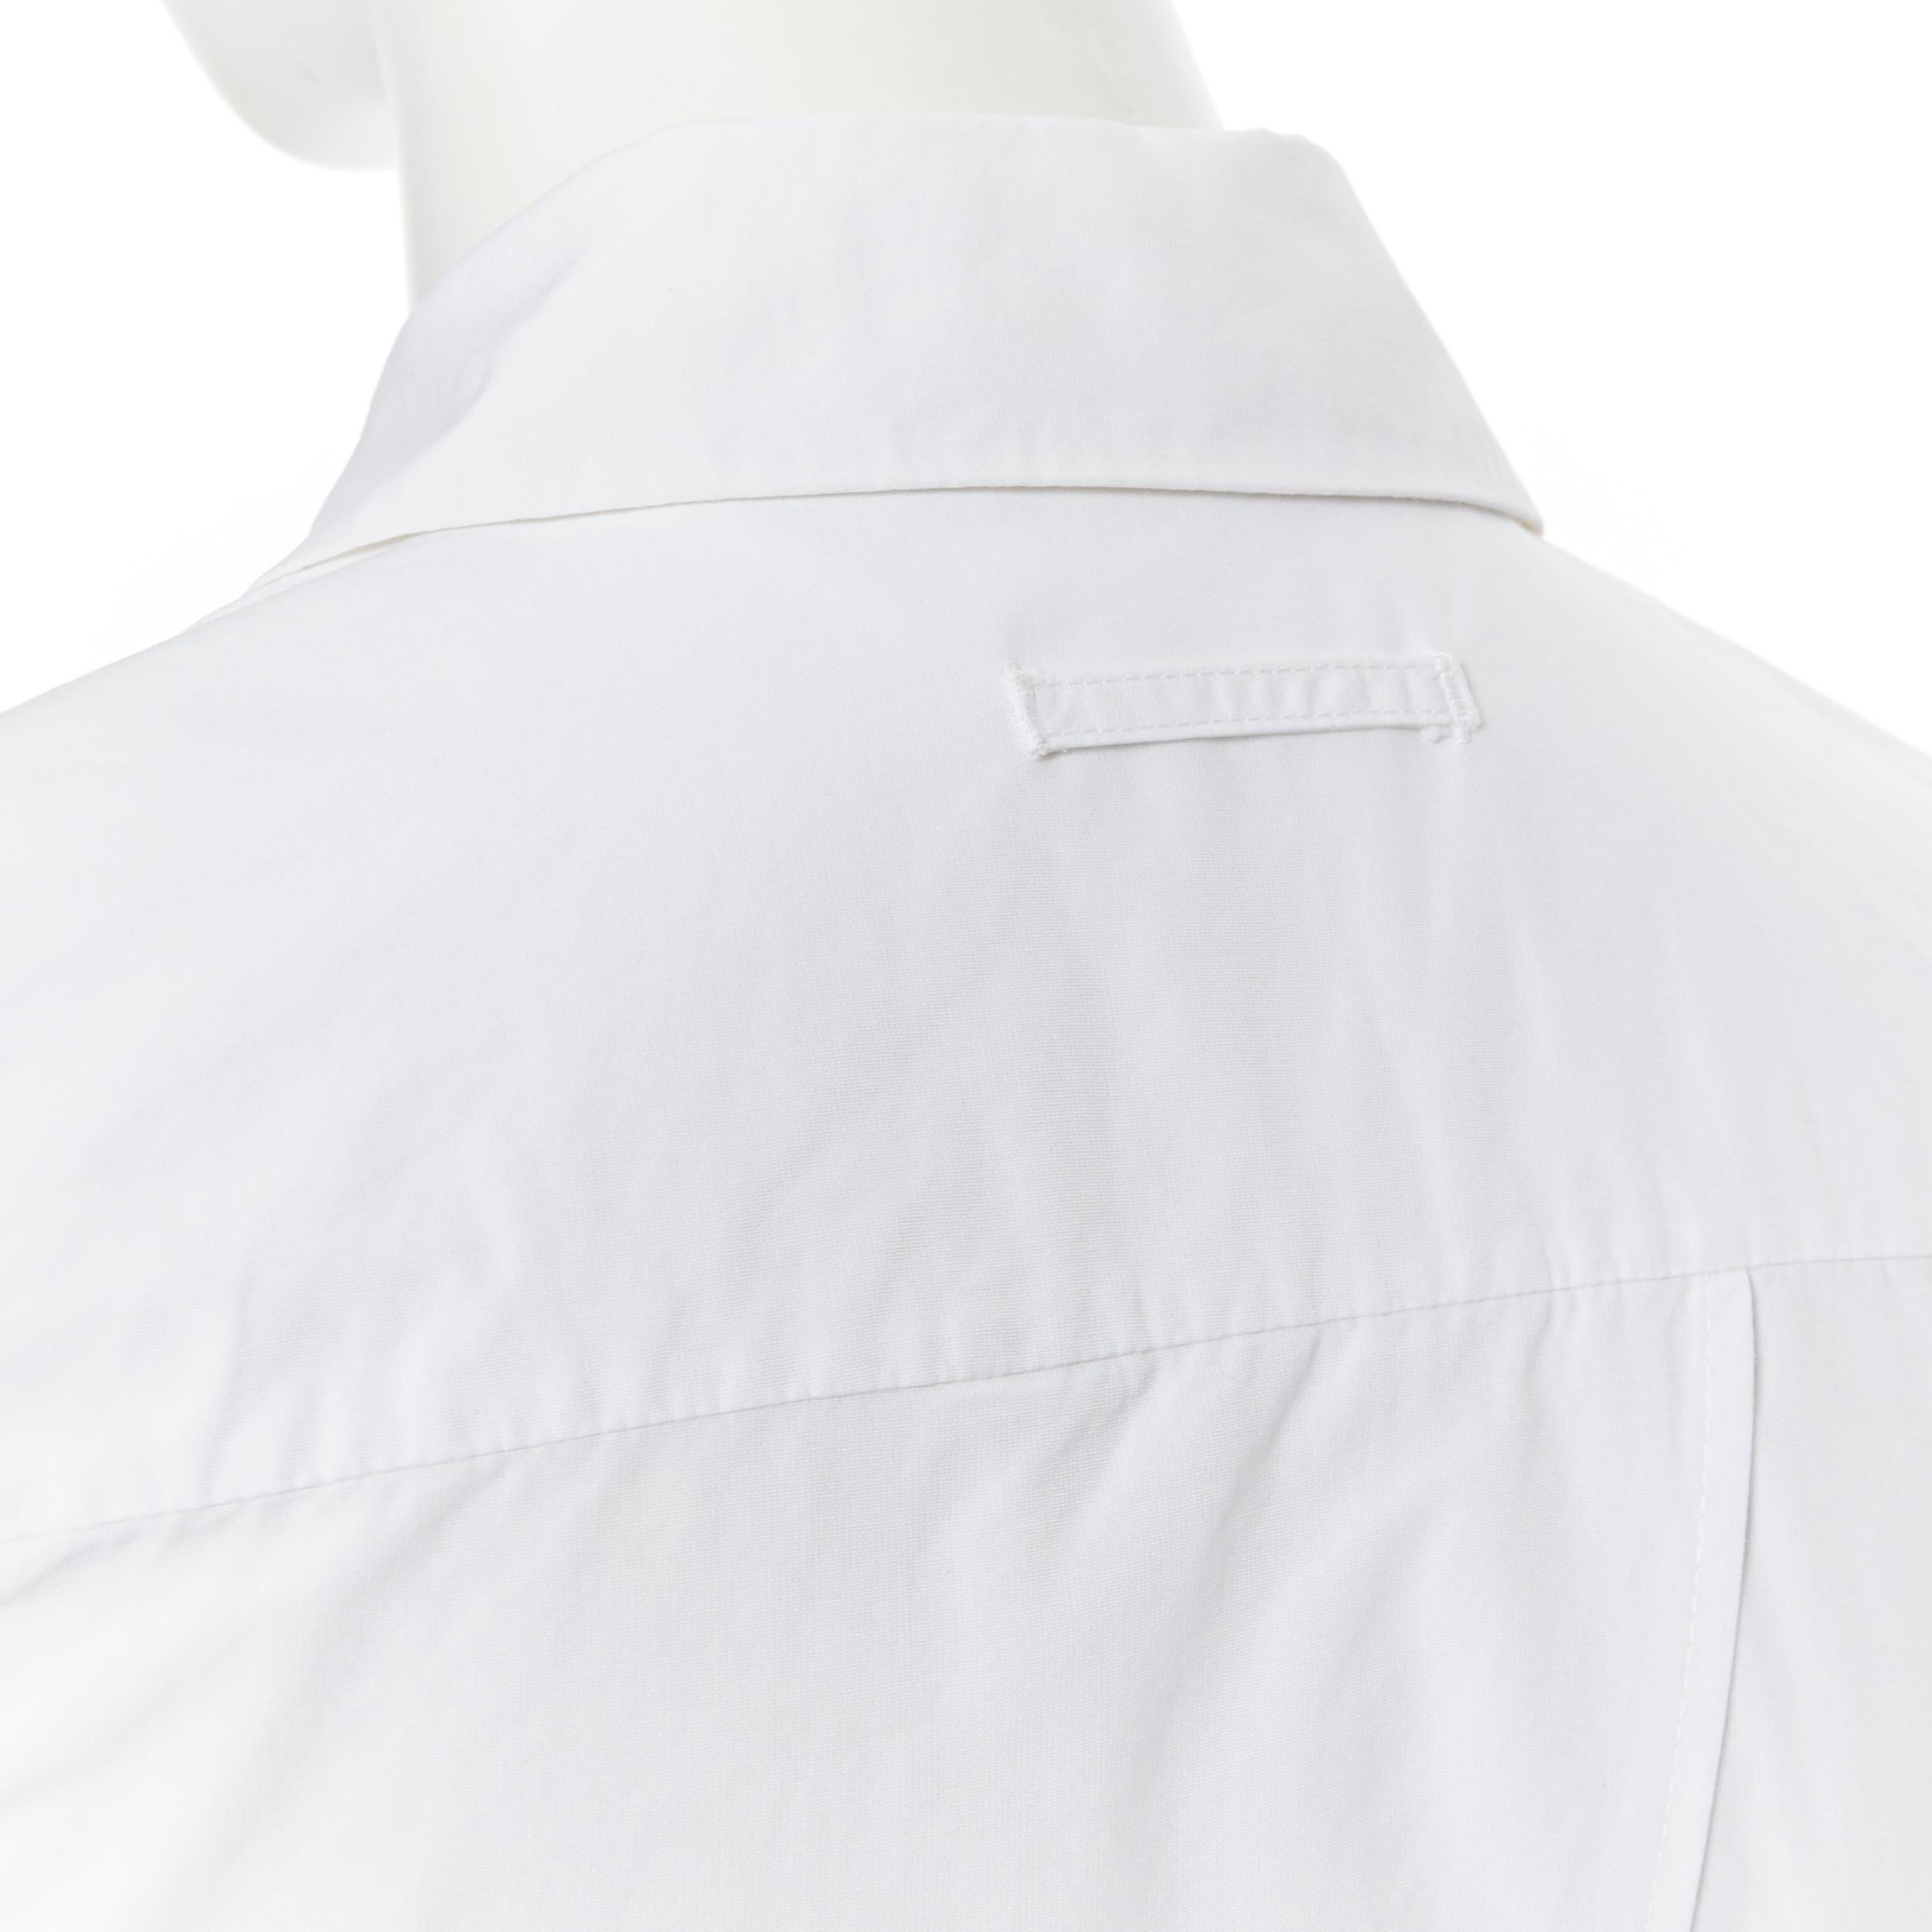 VICTORIA BECKHAM JEANS white cotton splt open back sleeveless shirt UK6 2